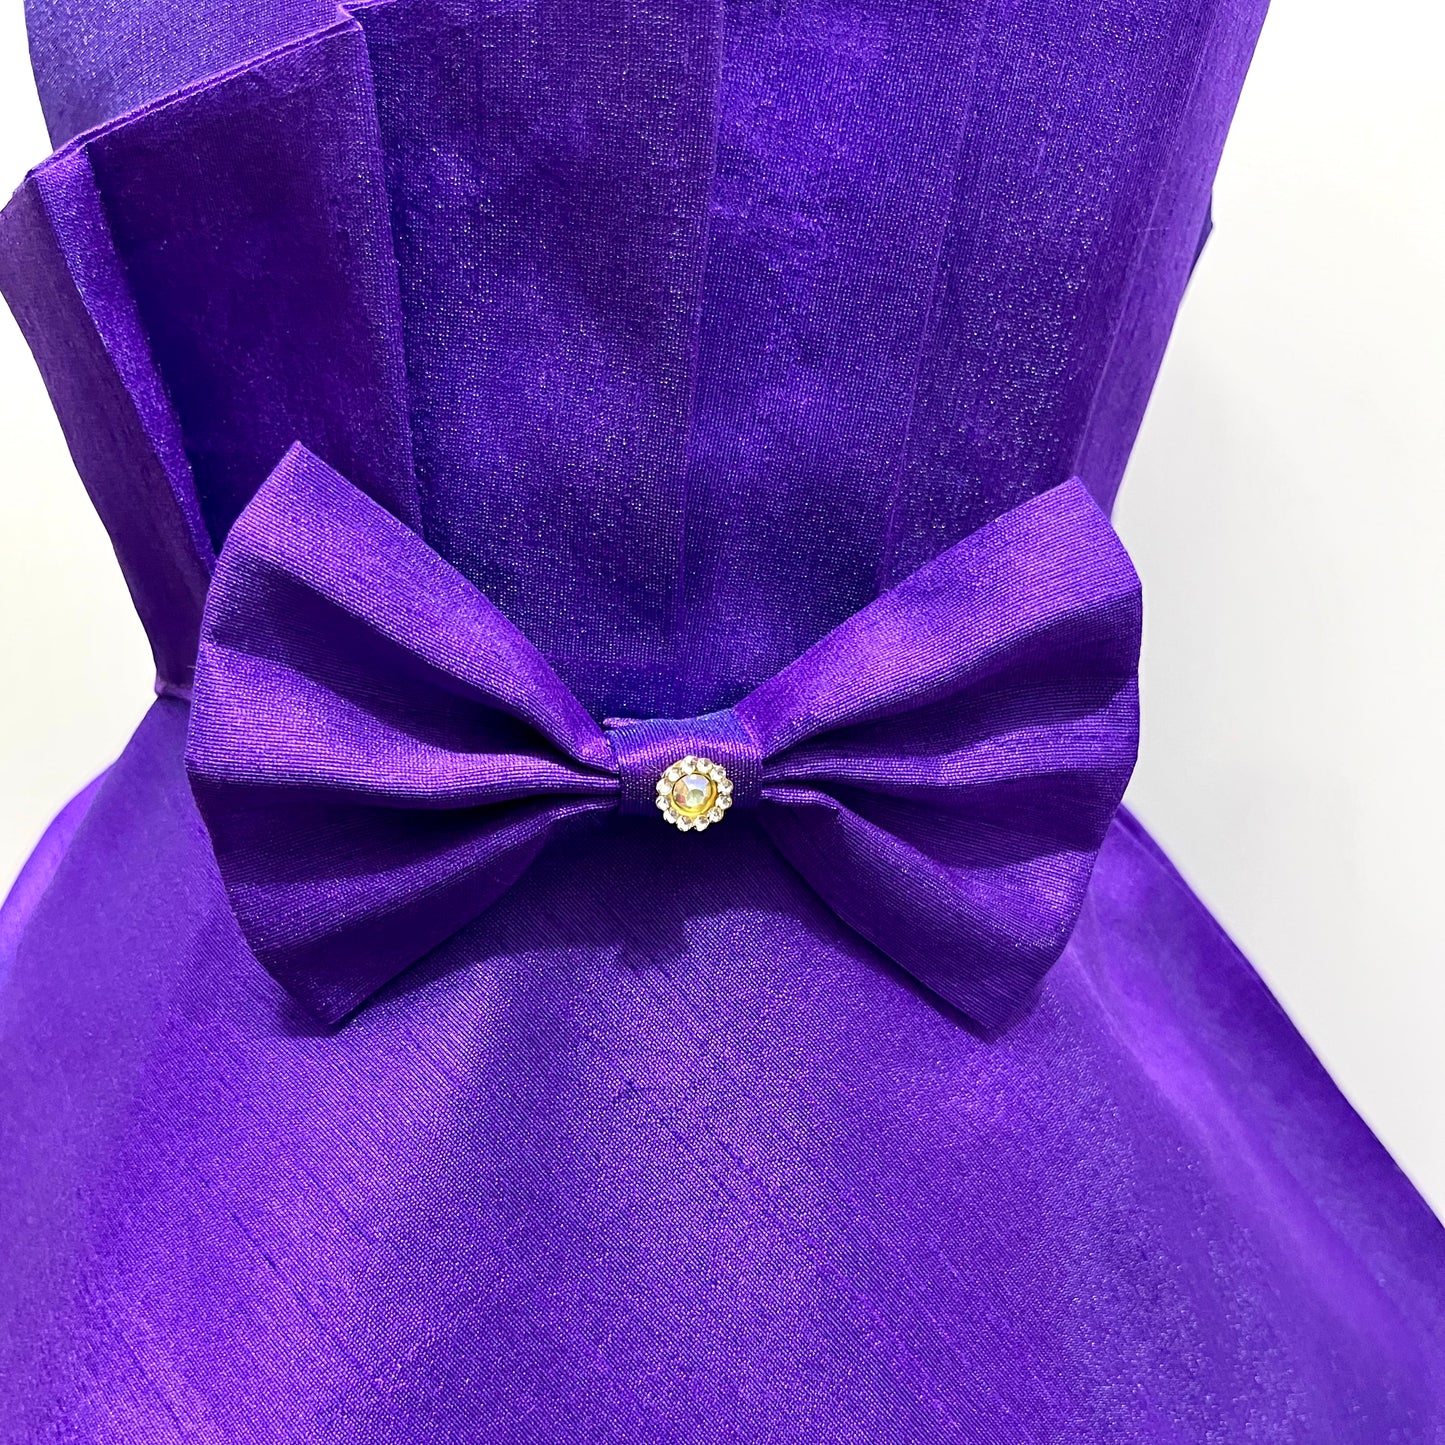 Designer baby girl purple summer dress with bow